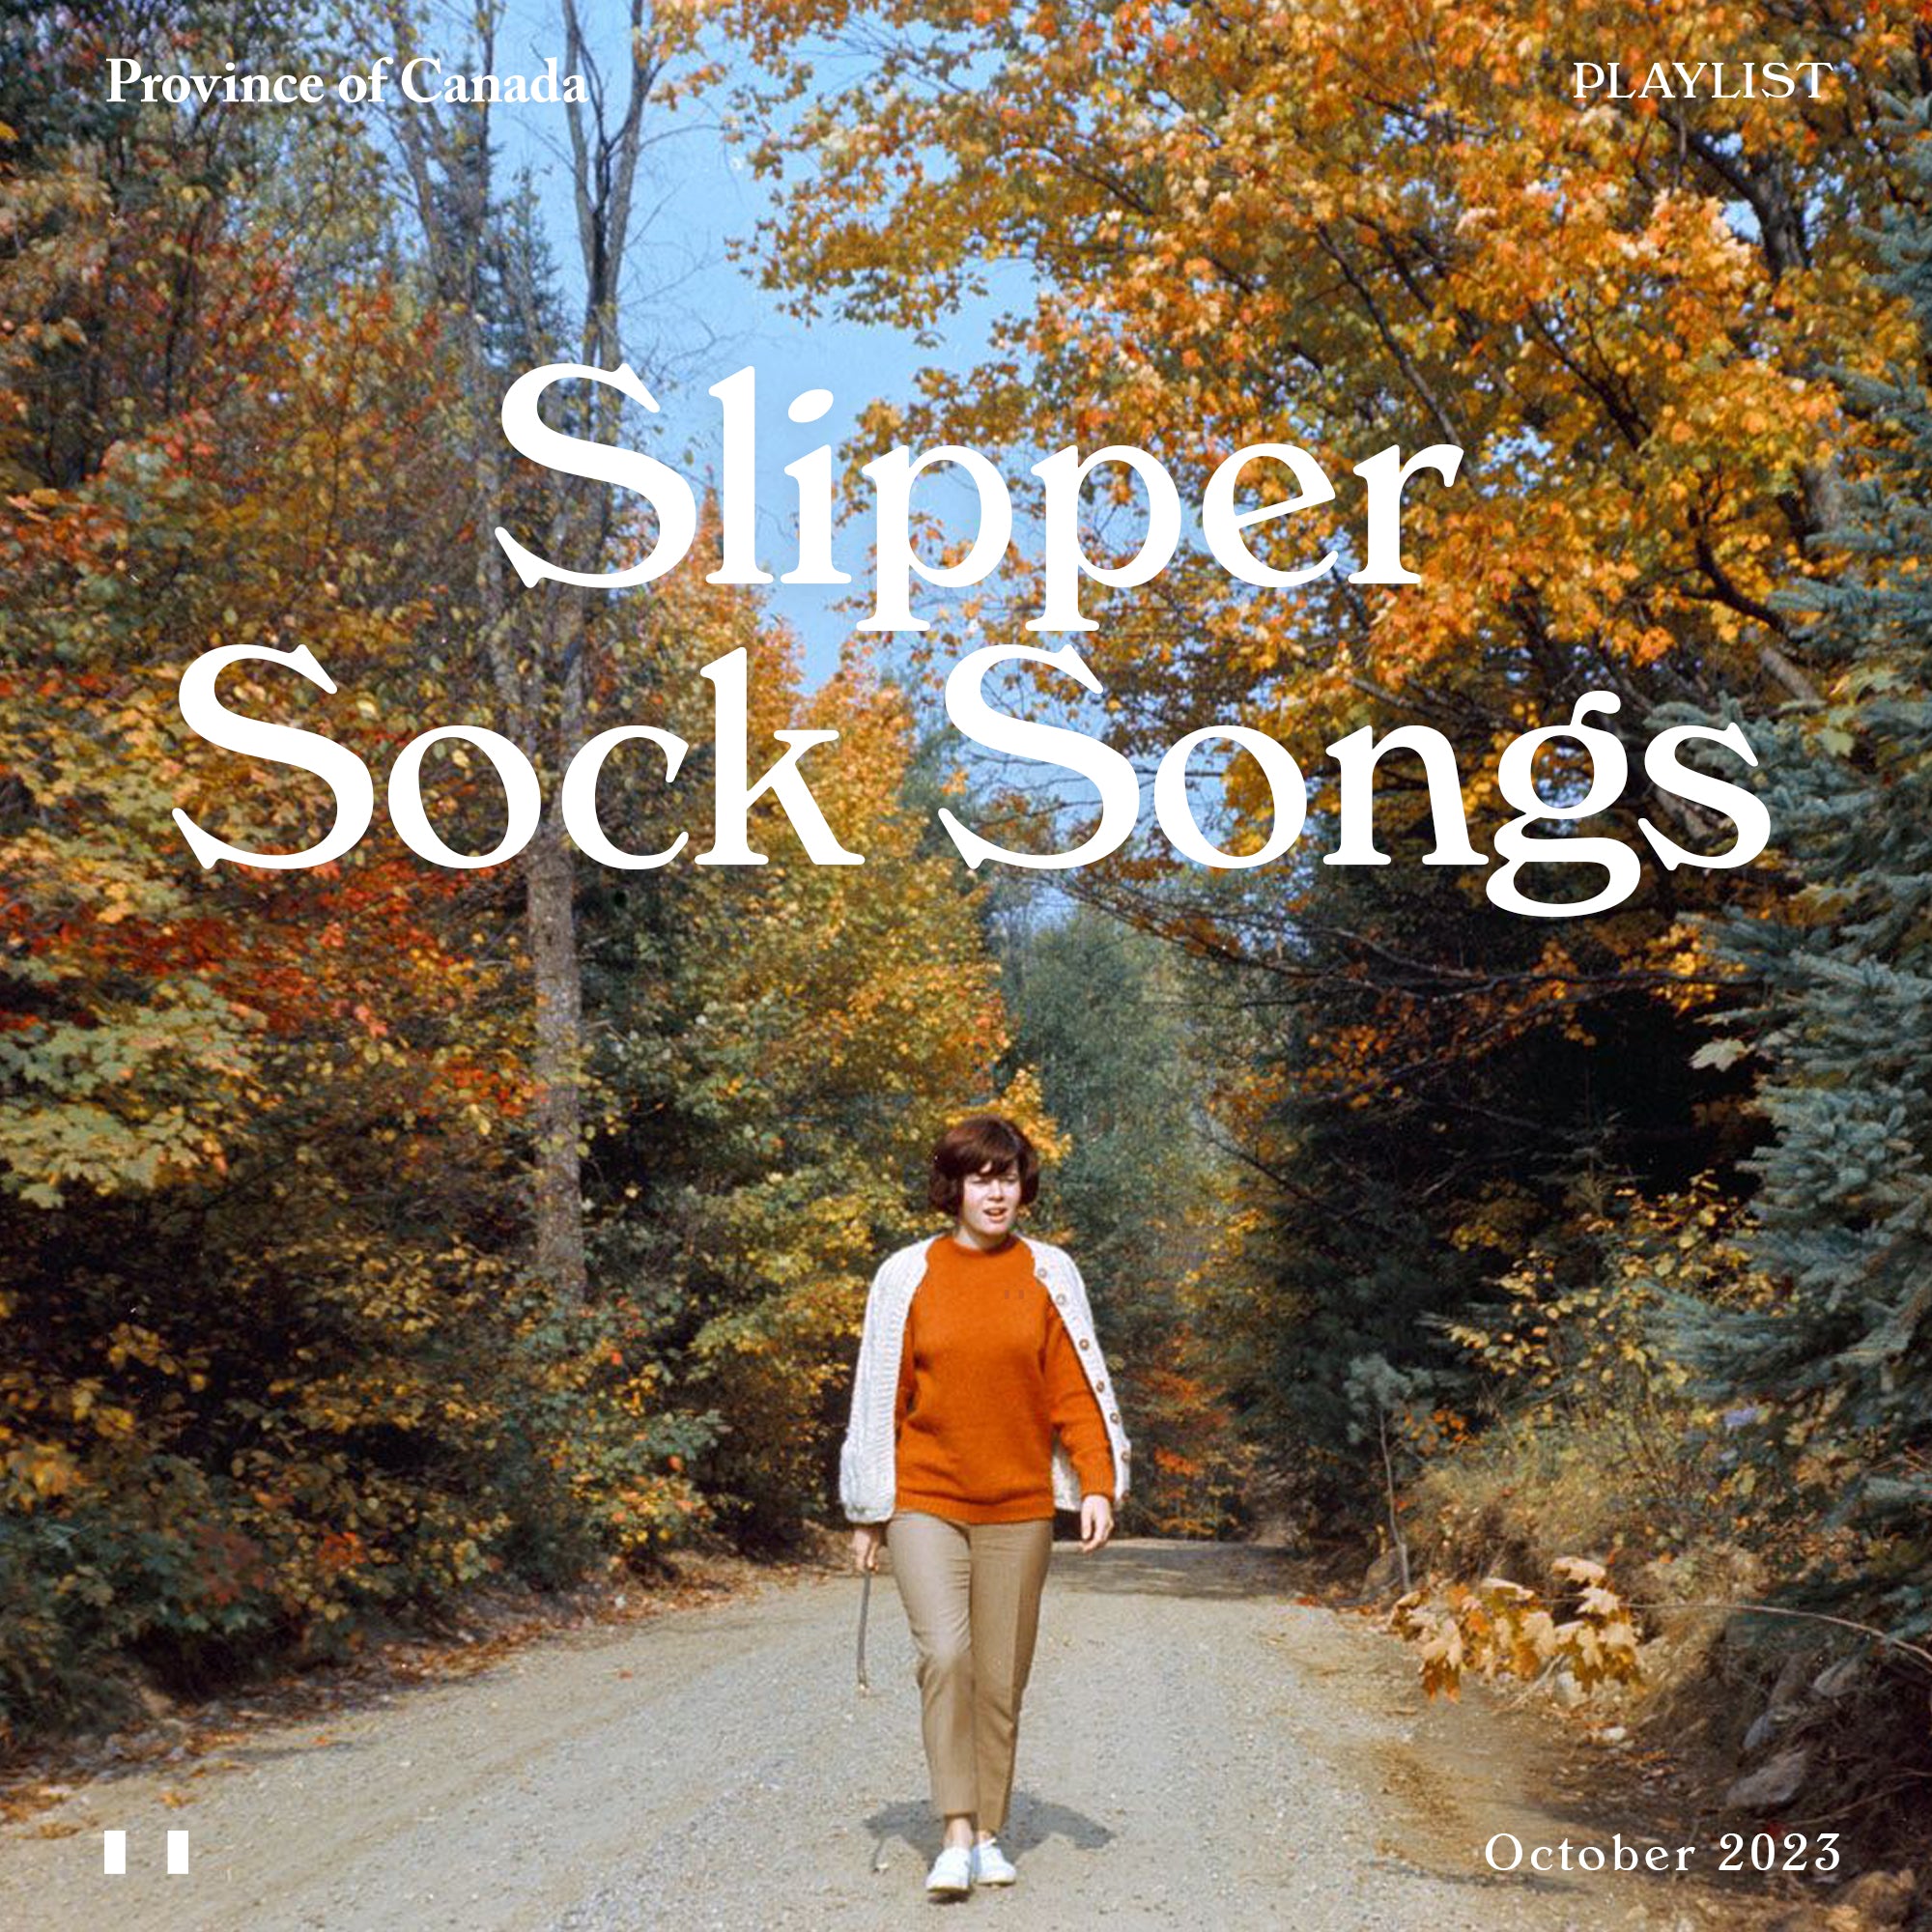 Province of Canada - Playlist - Slipper Sock Songs